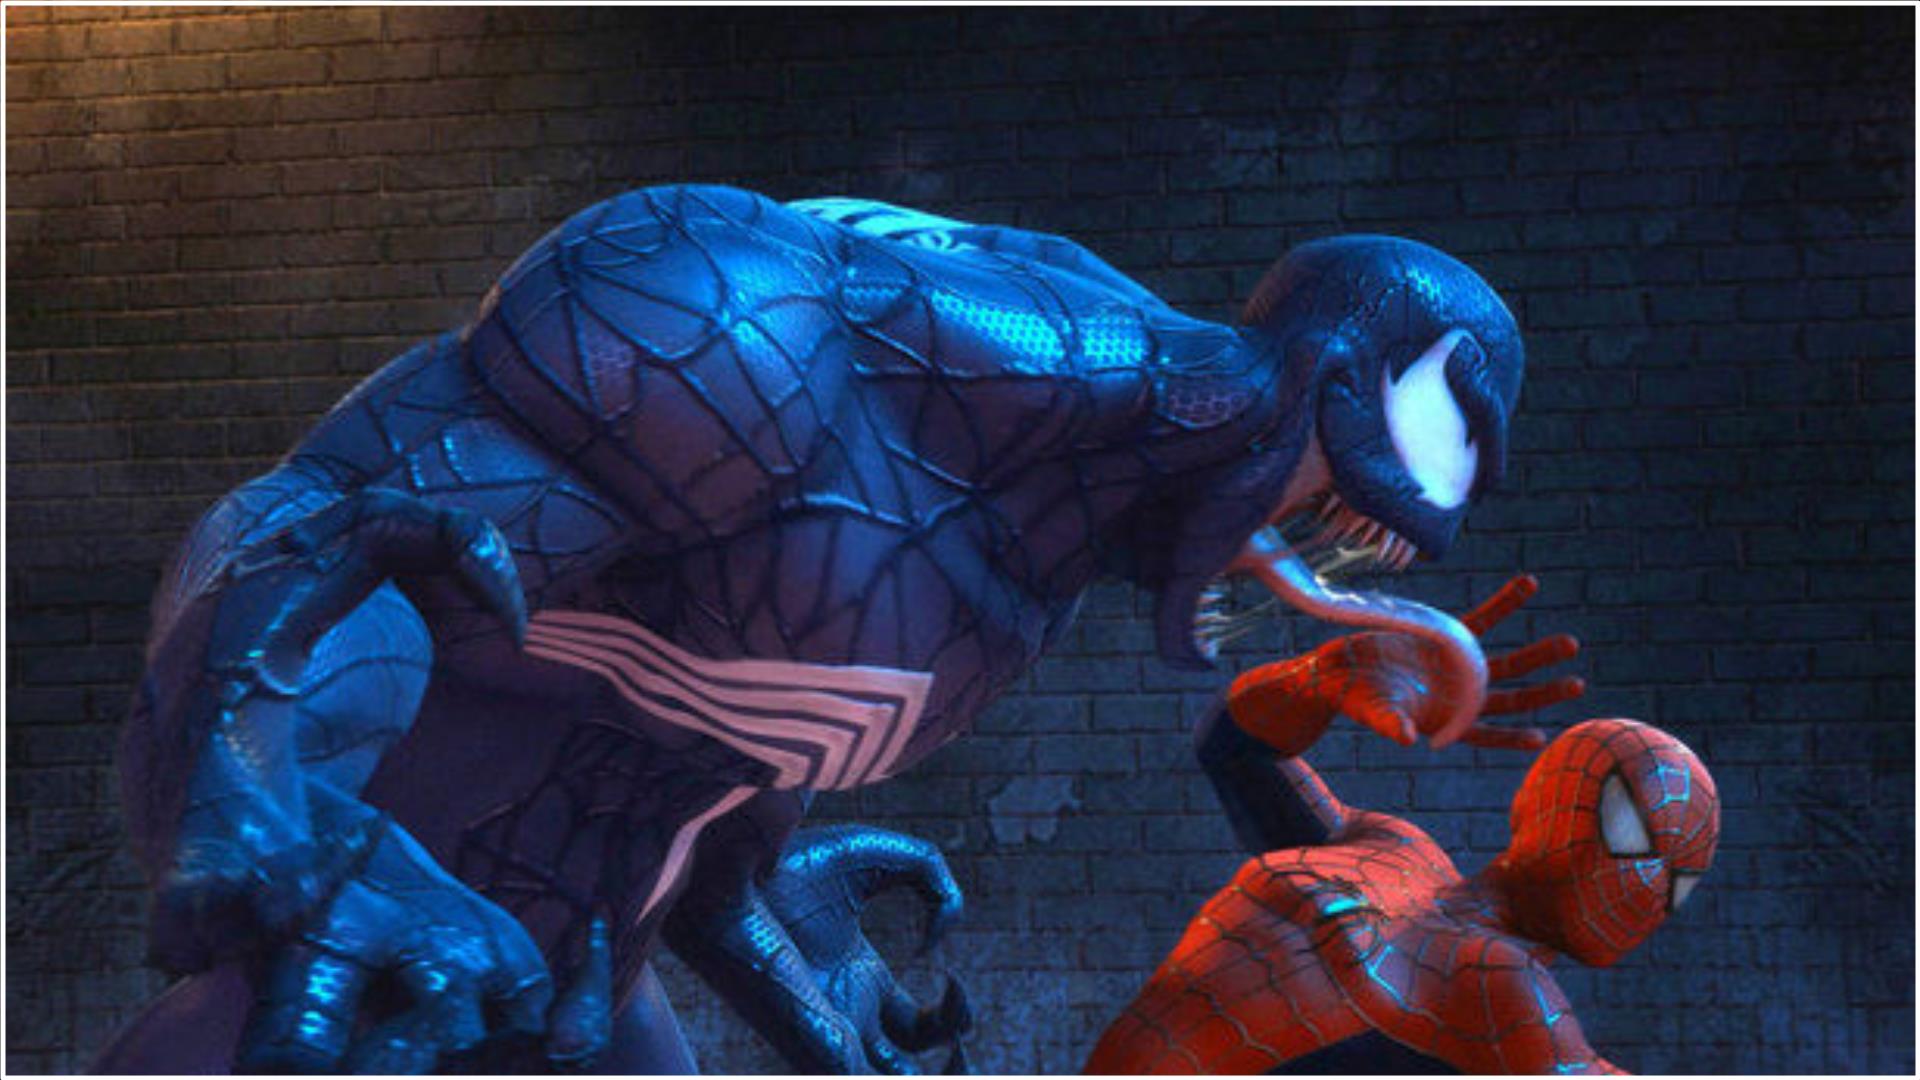 Spider-Man - Friend Or Foe ROM - PSP Download - Emulator Games